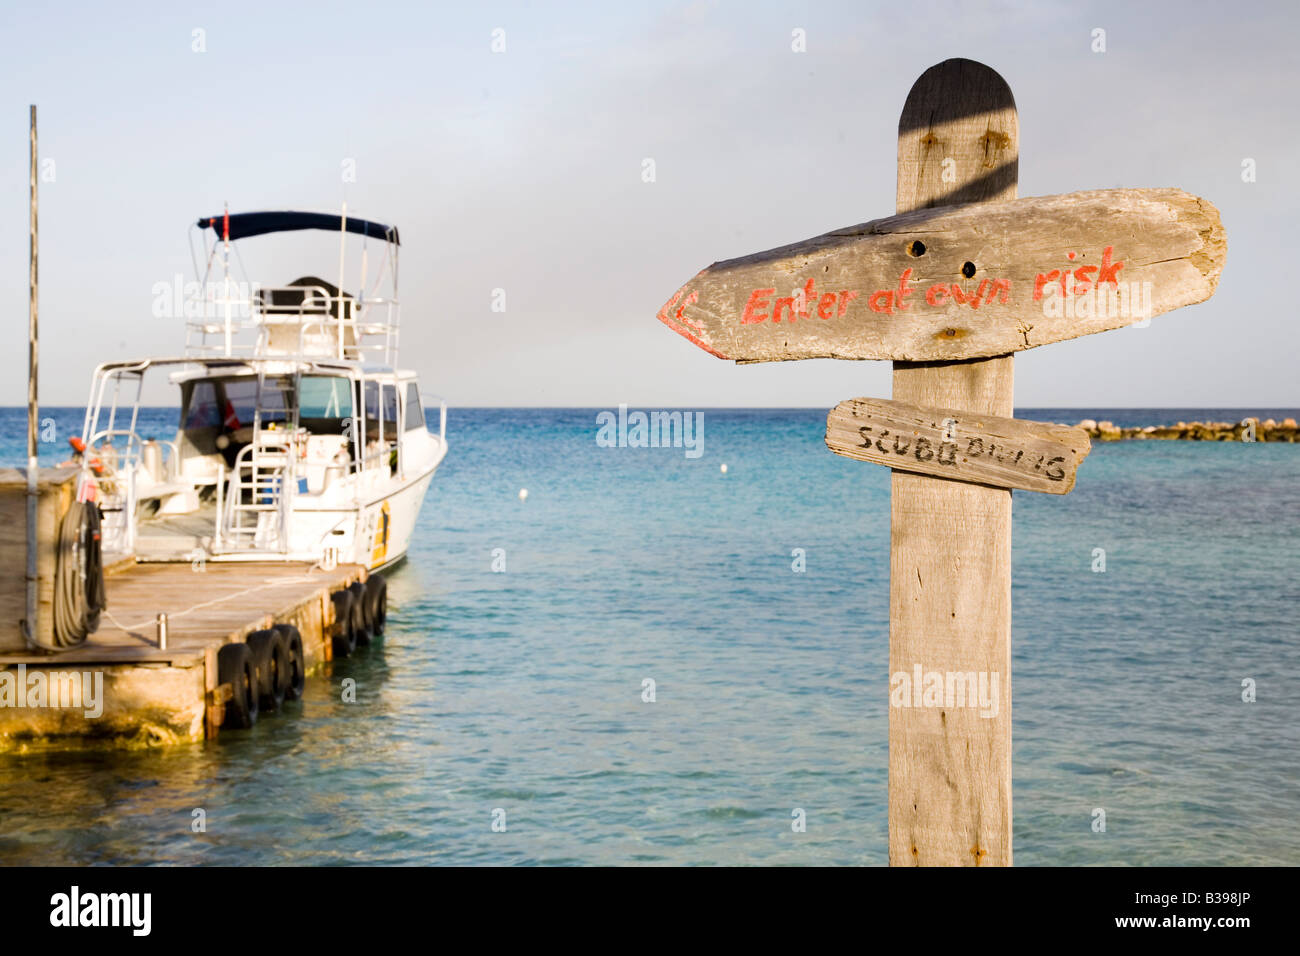 Boat and signpost at Piscadera Bay beach Curacao Netherlands Antilles Caribbean Stock Photo